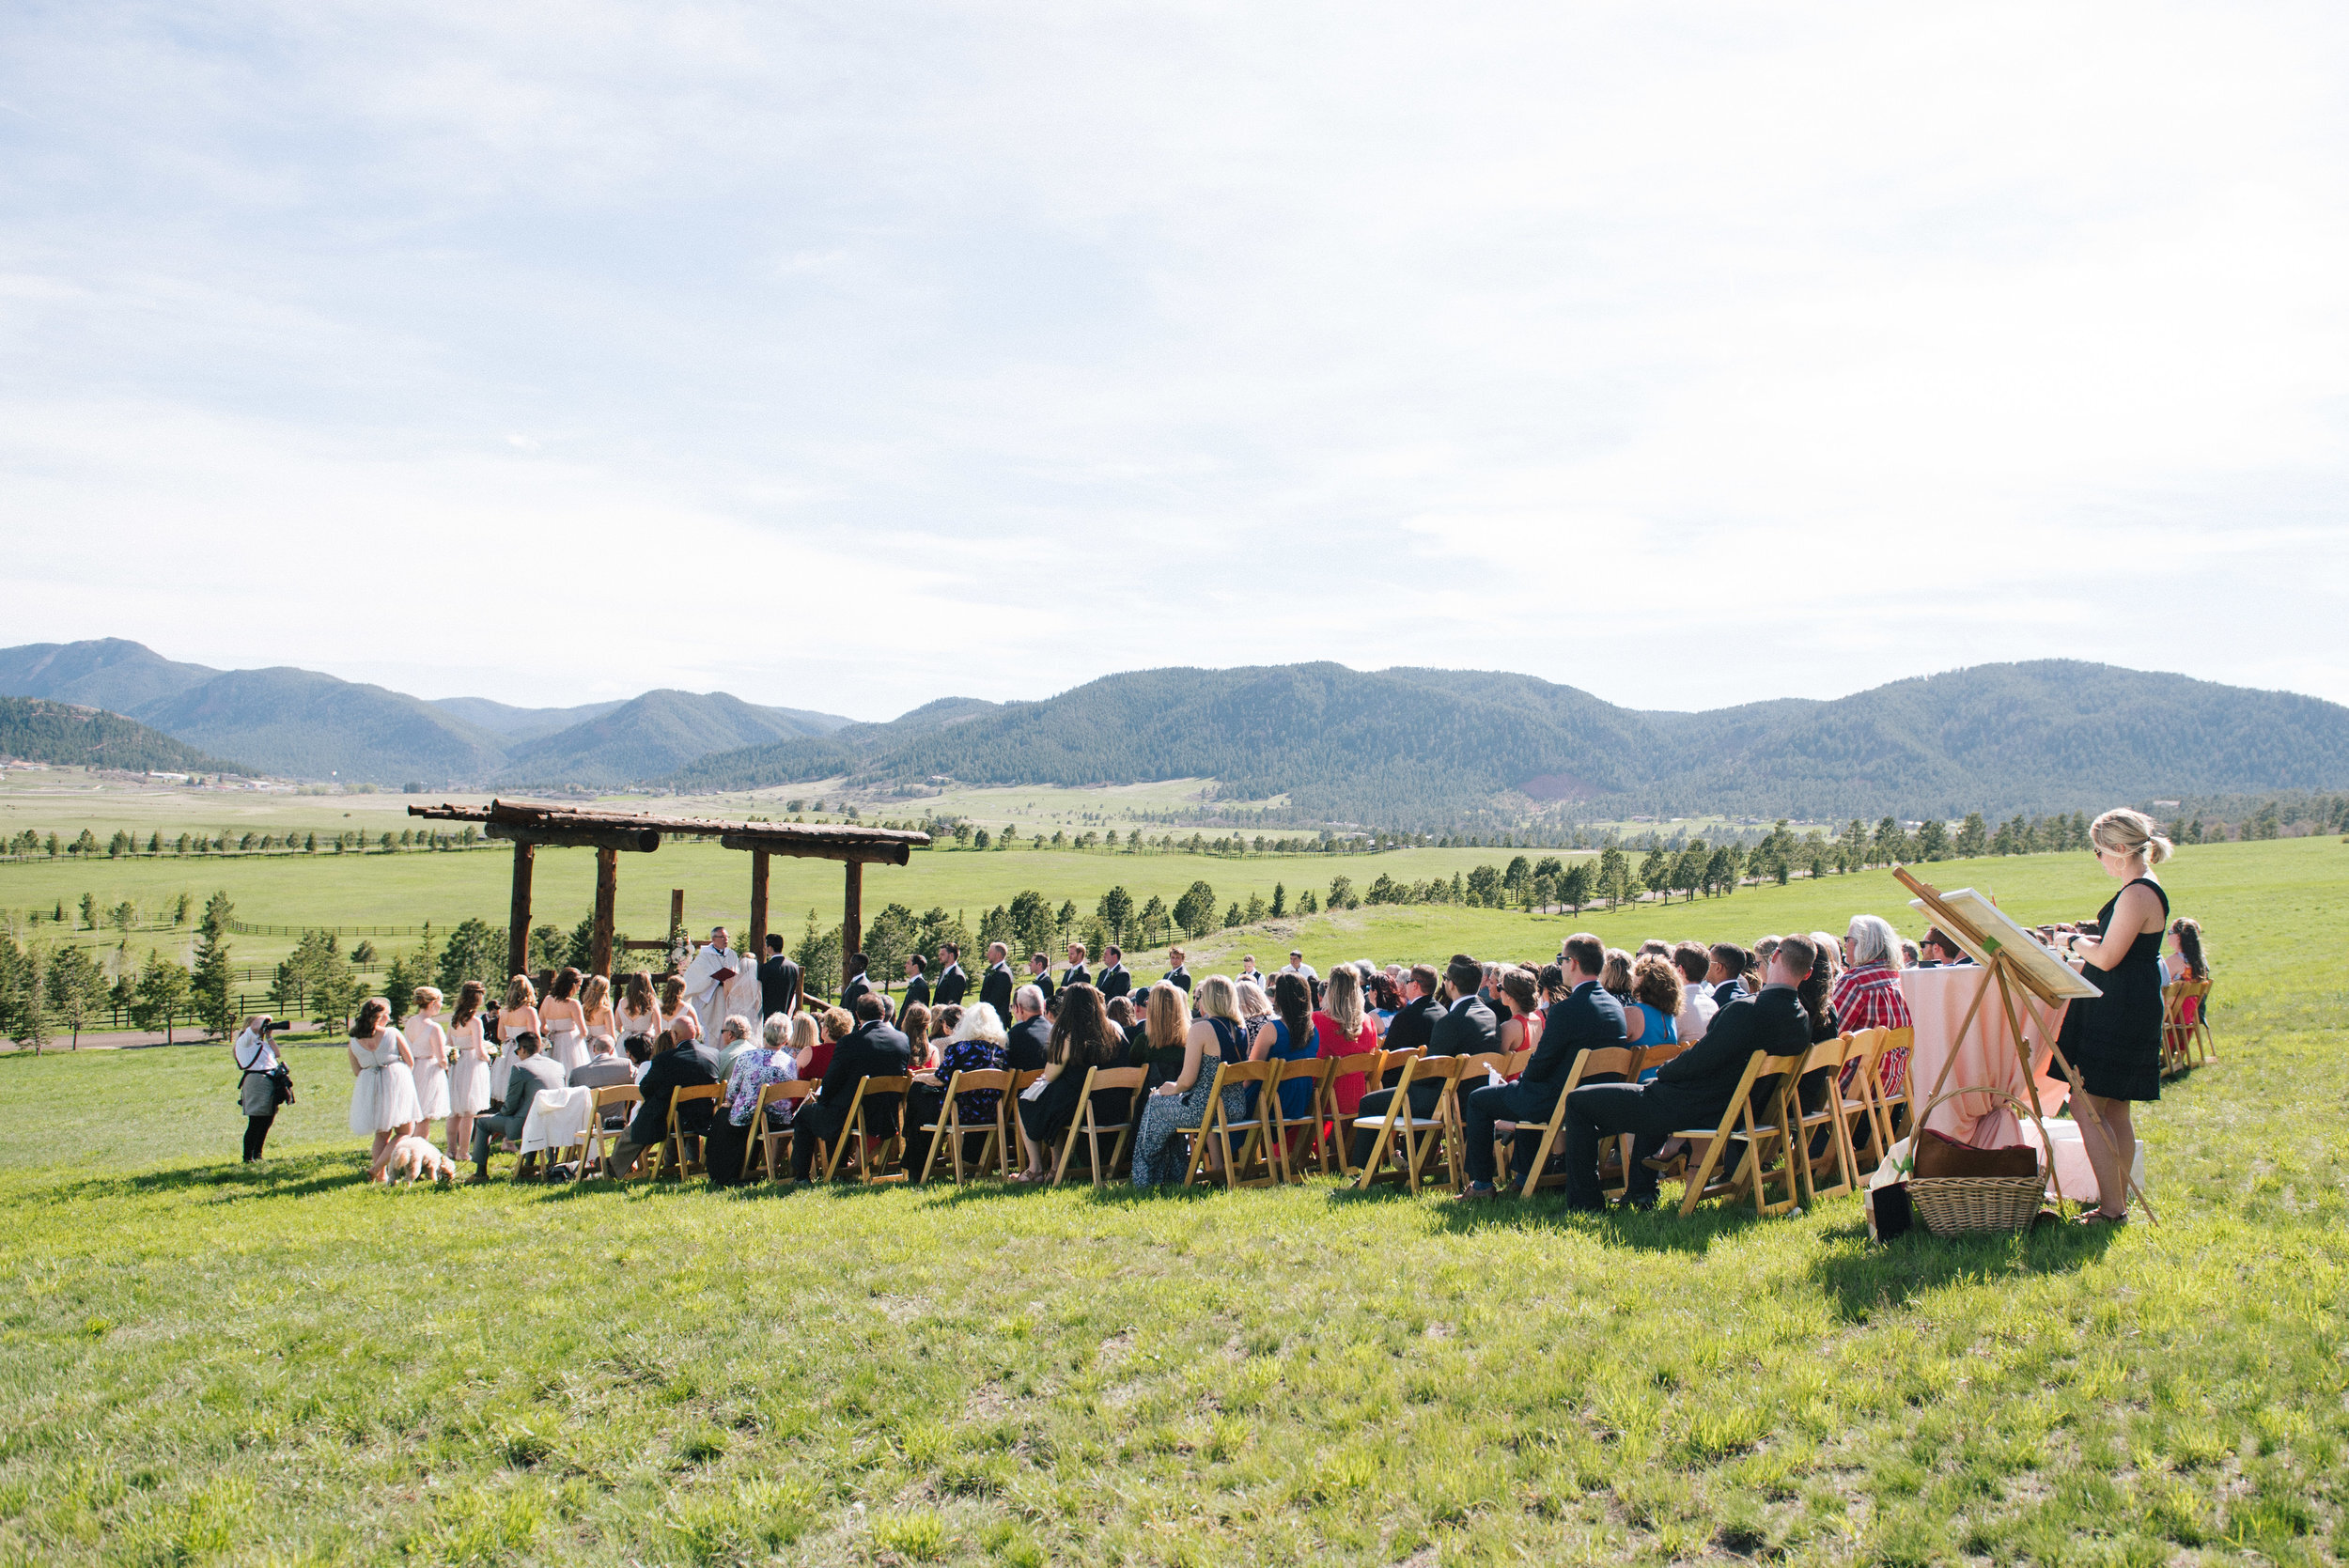 Kyle-Scott-Spruce-Mountain-wedding-by-Lisa-O'Dwyer-517.jpg